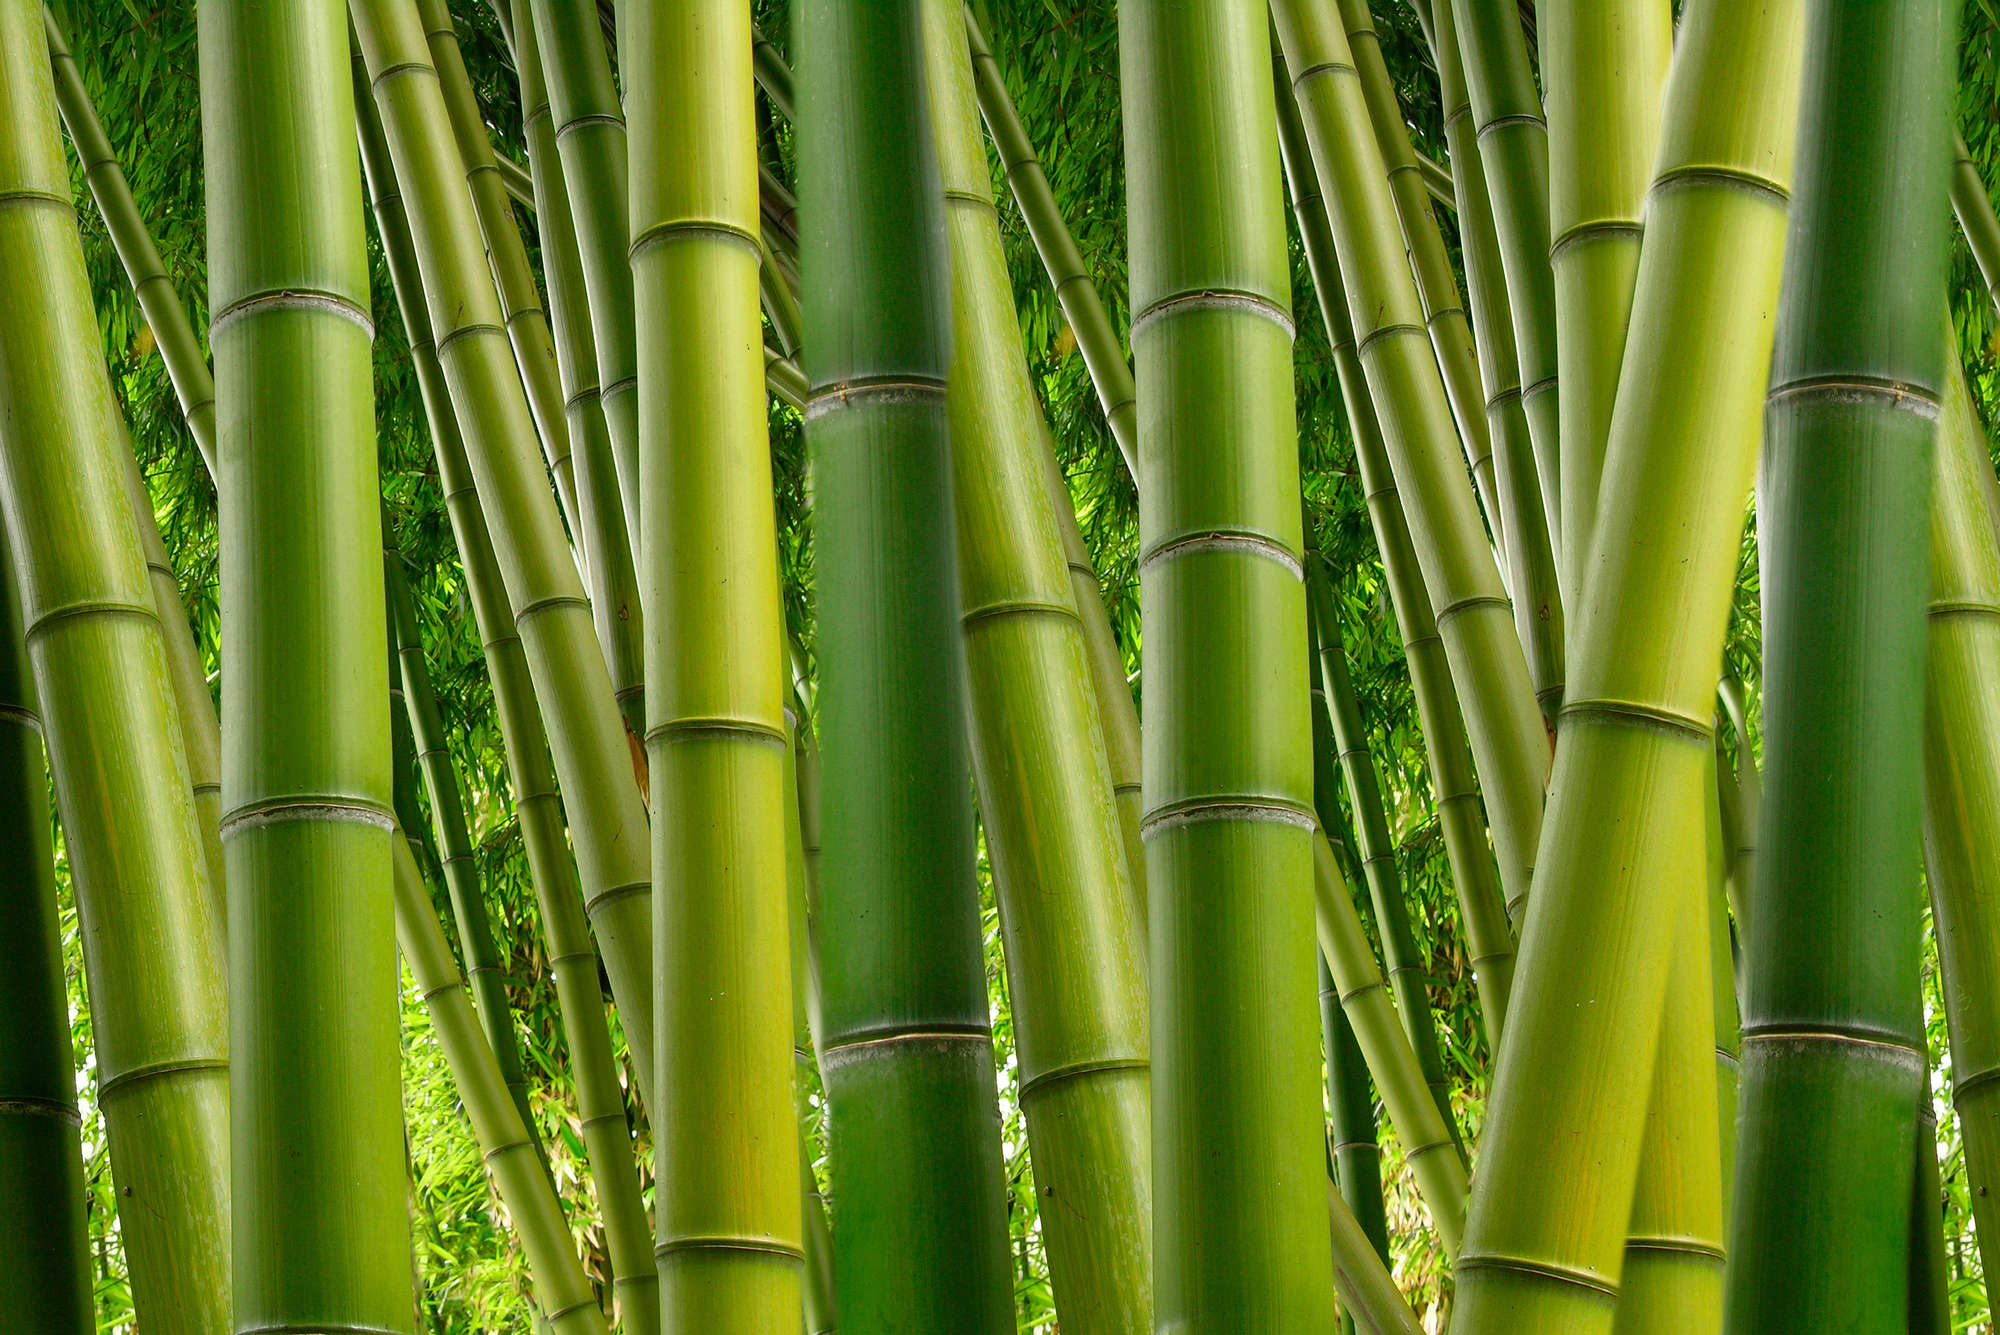             Natuurbehang bamboebos motief op parelmoer glad vlies
        